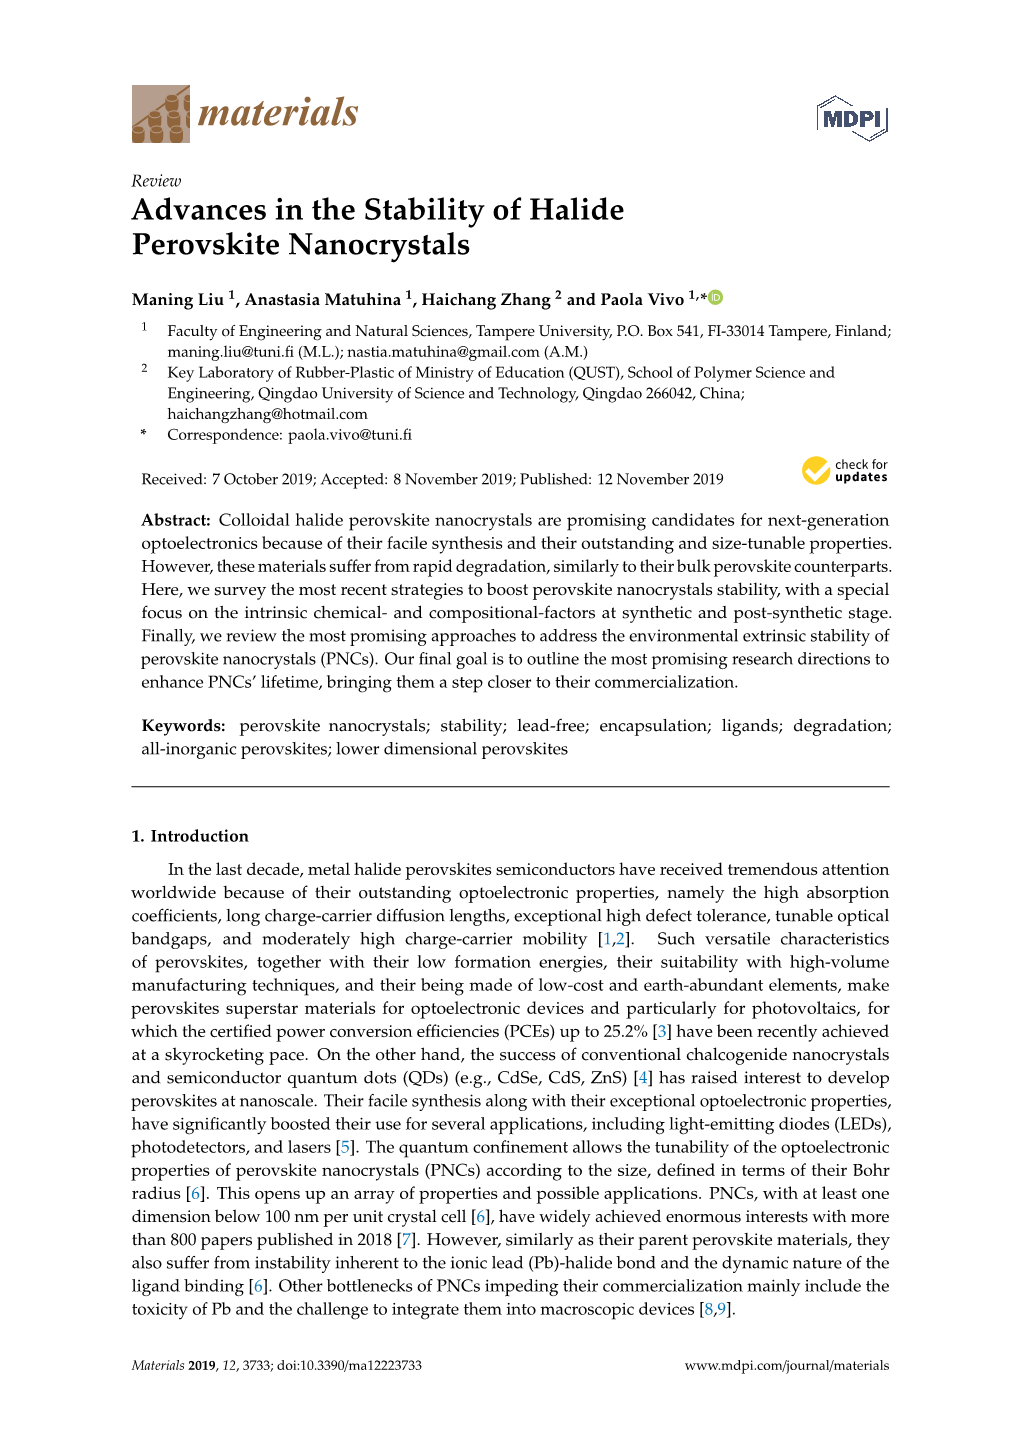 Advances in the Stability of Halide Perovskite Nanocrystals